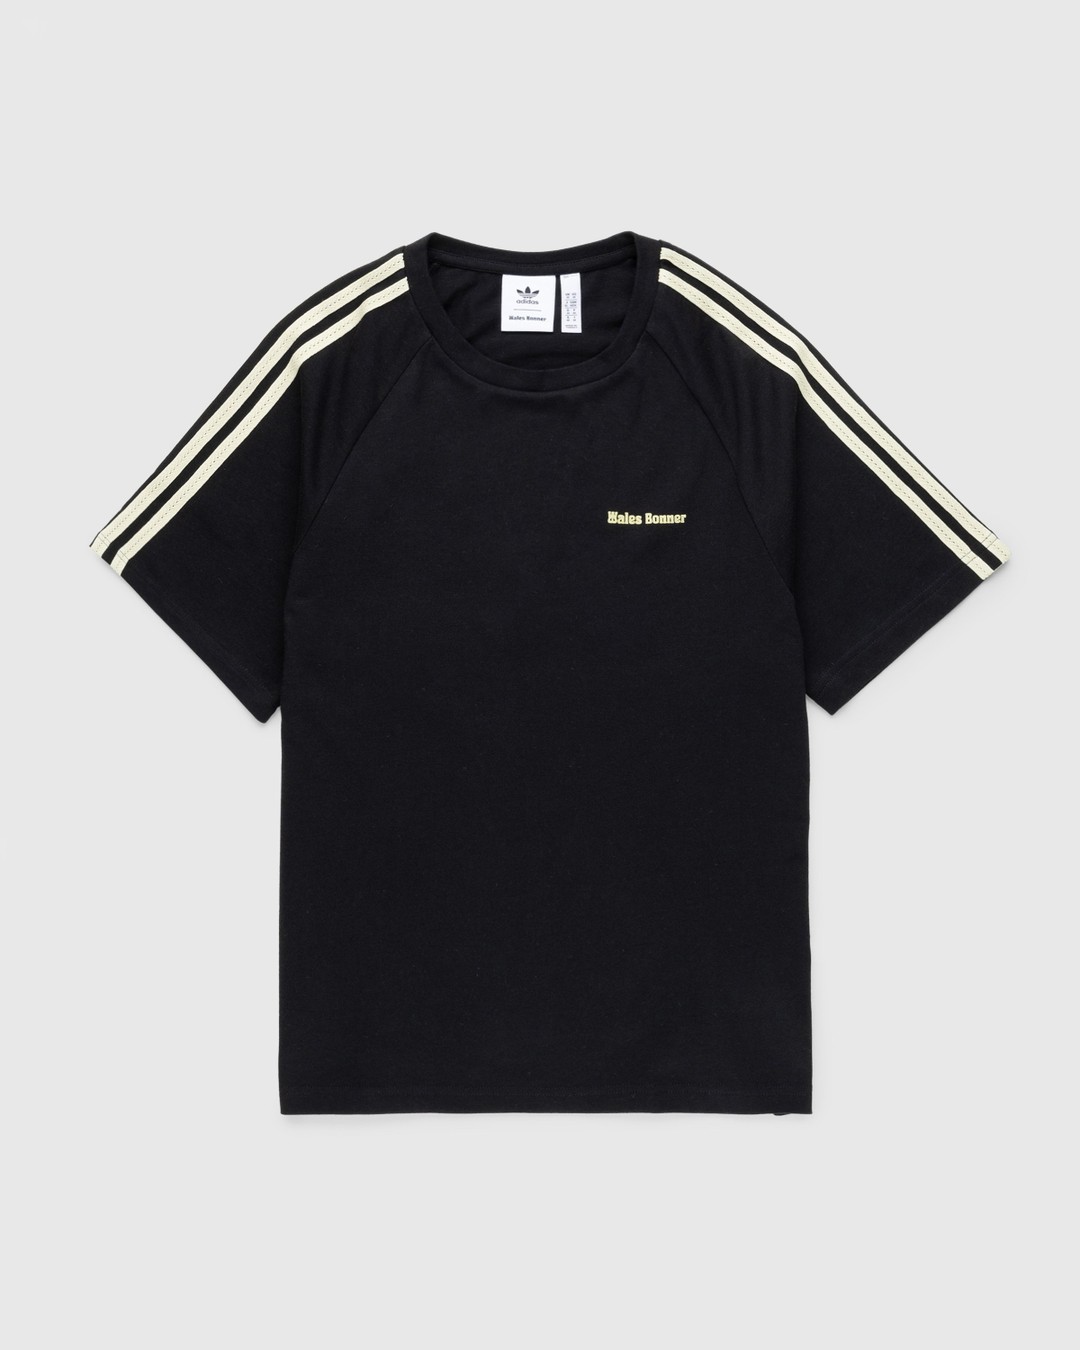 Adidas x Wales Bonner – Organic Cotton Tee Black - T-shirts - Black - Image 1